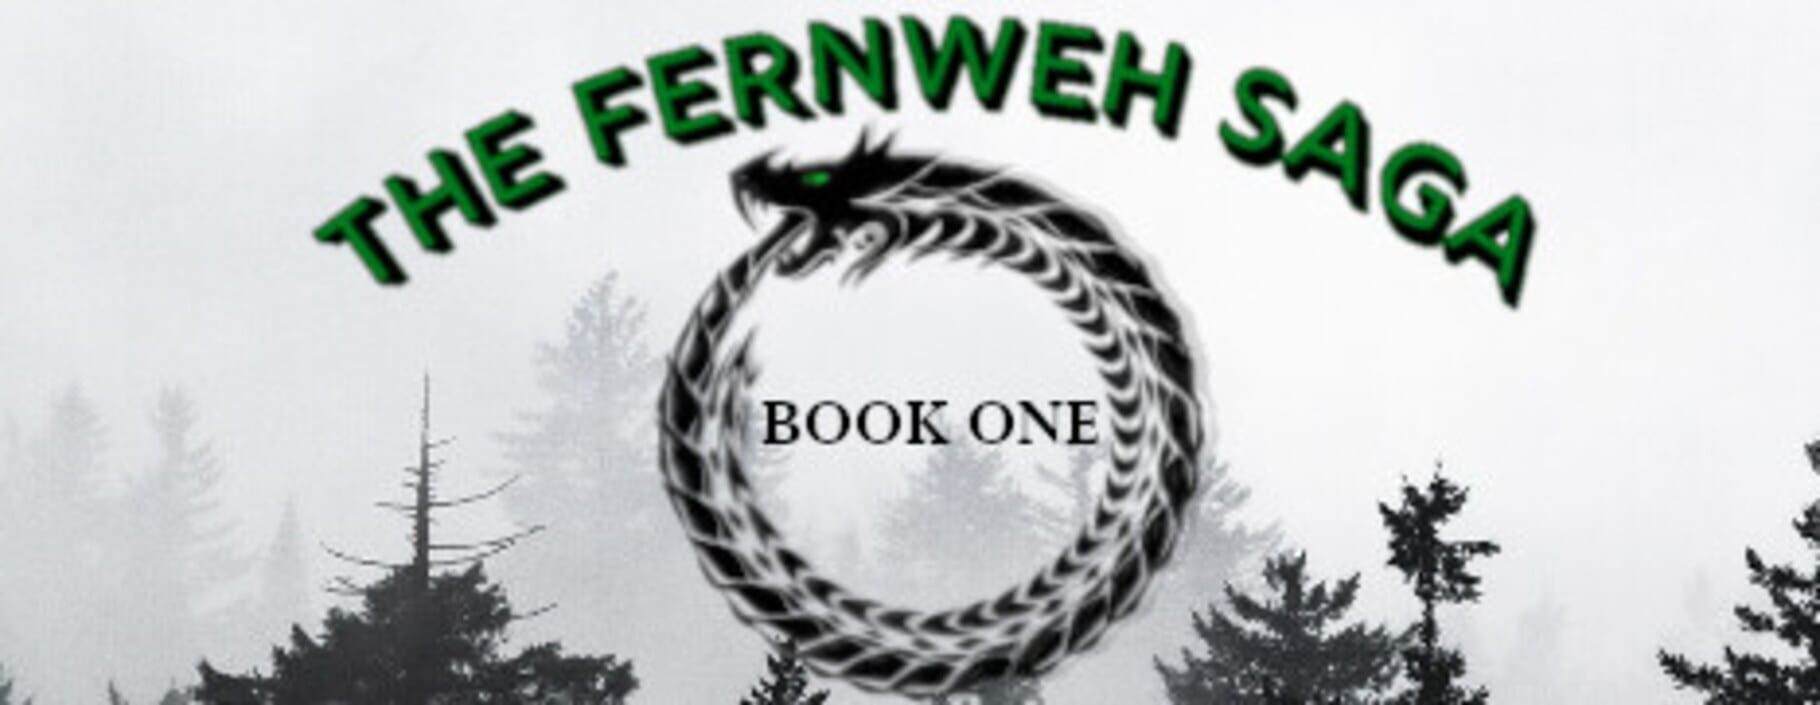 Captura de pantalla - The Fernweh Saga: Book One